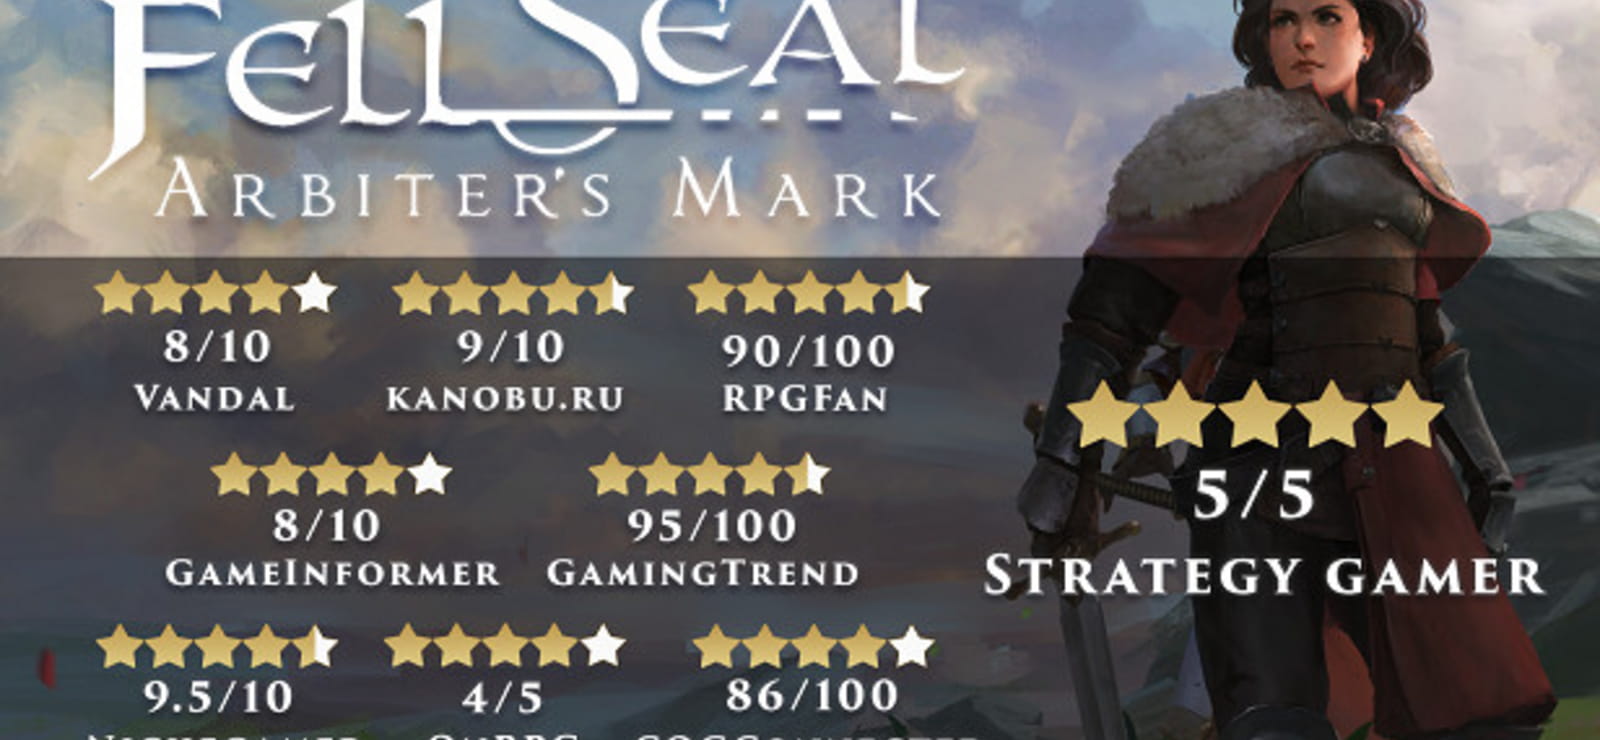 Fell Seal DLC Bundle